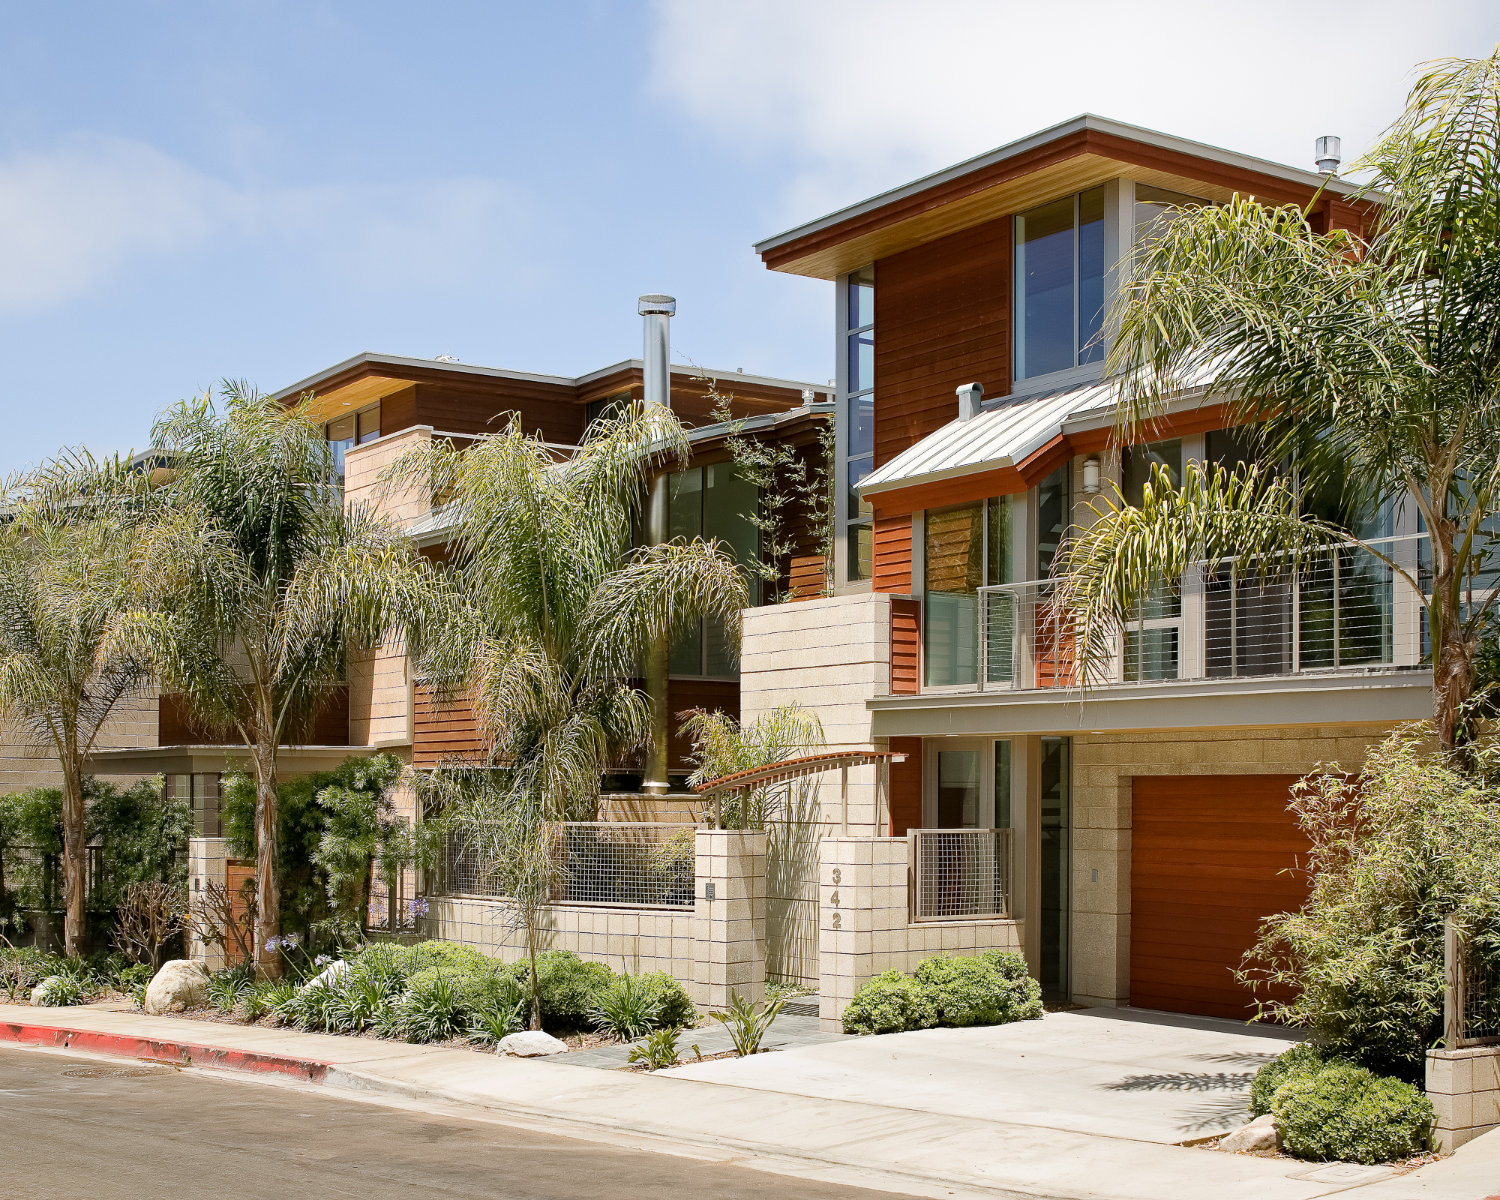 Residential Architecture La Jolla California - Windansea Beach Homes